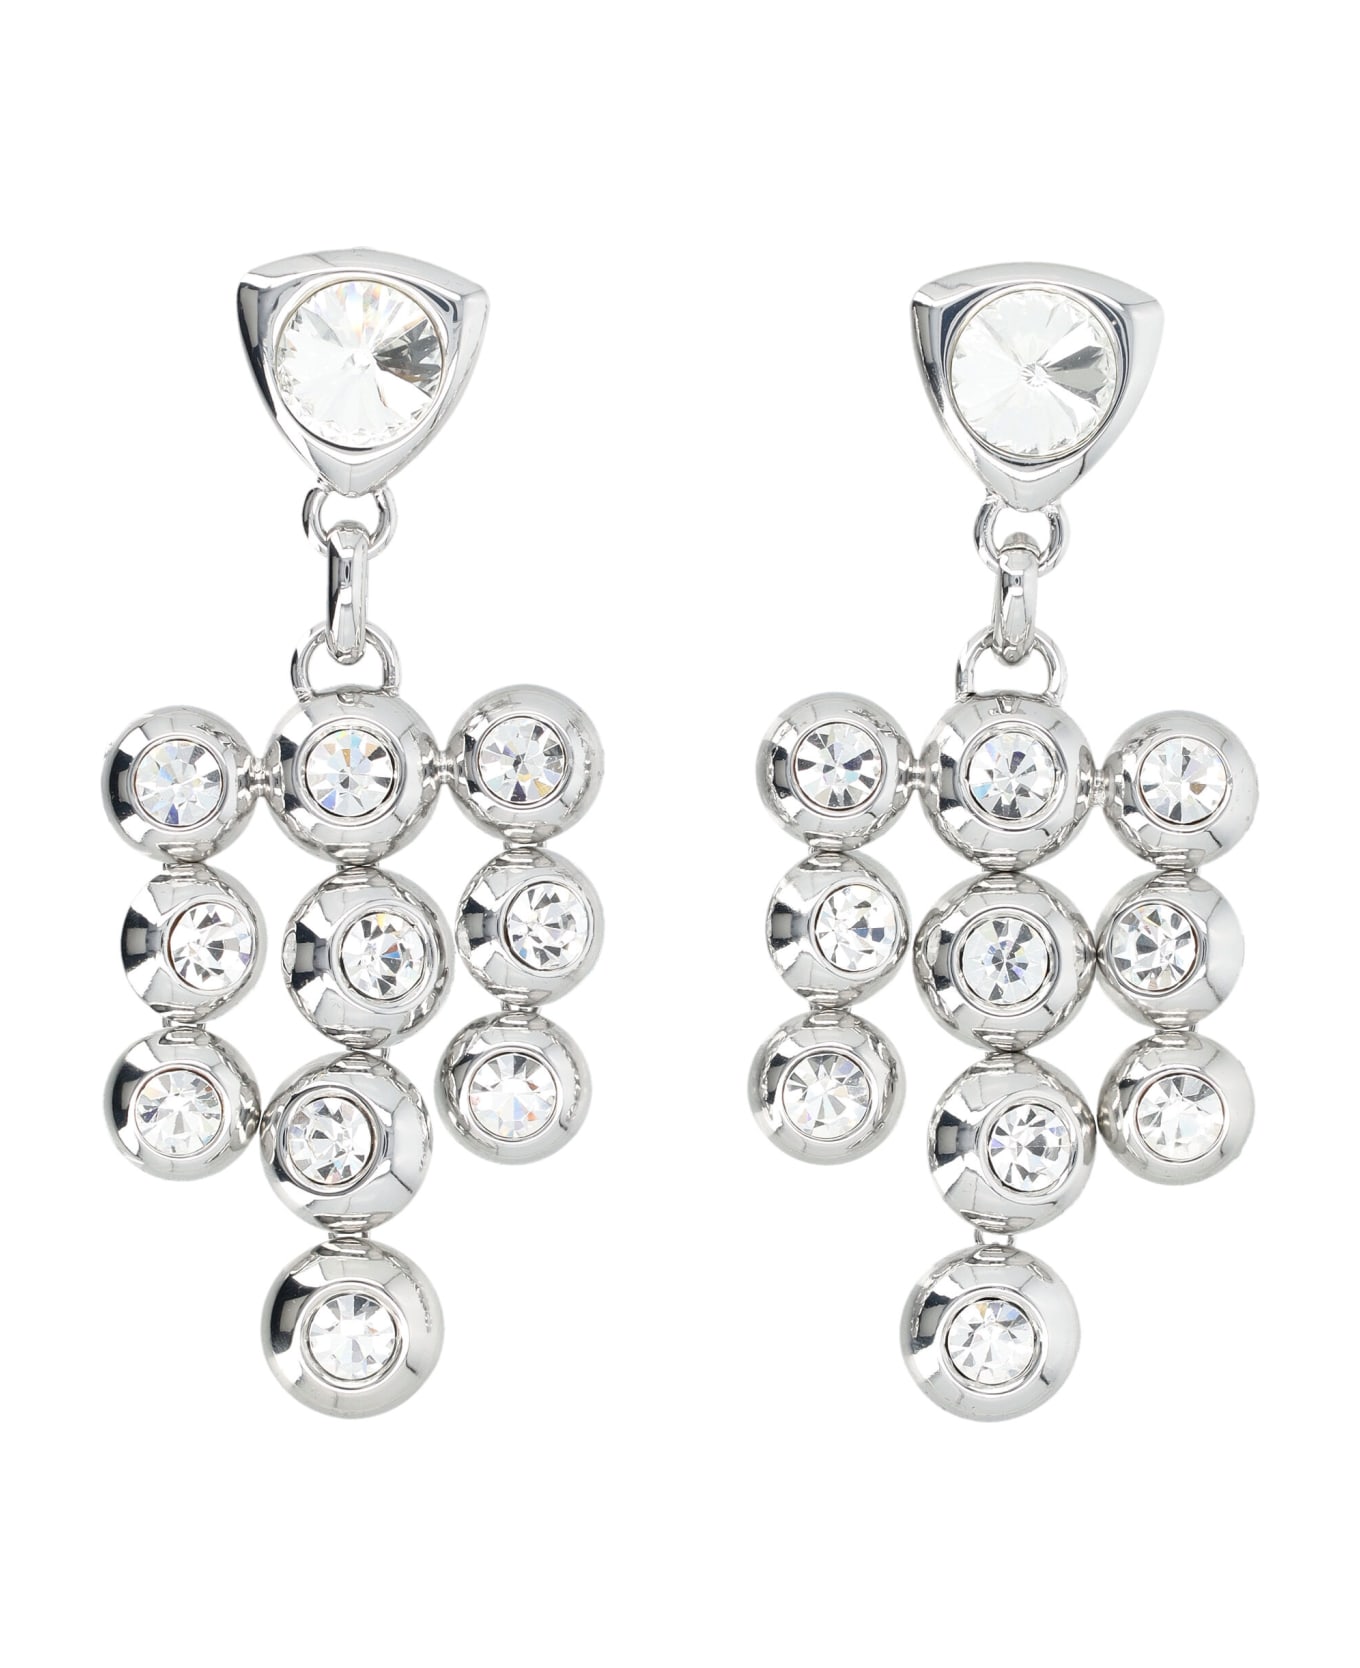 AREA Crystal Chandelier Earrings - SILVER イヤリング